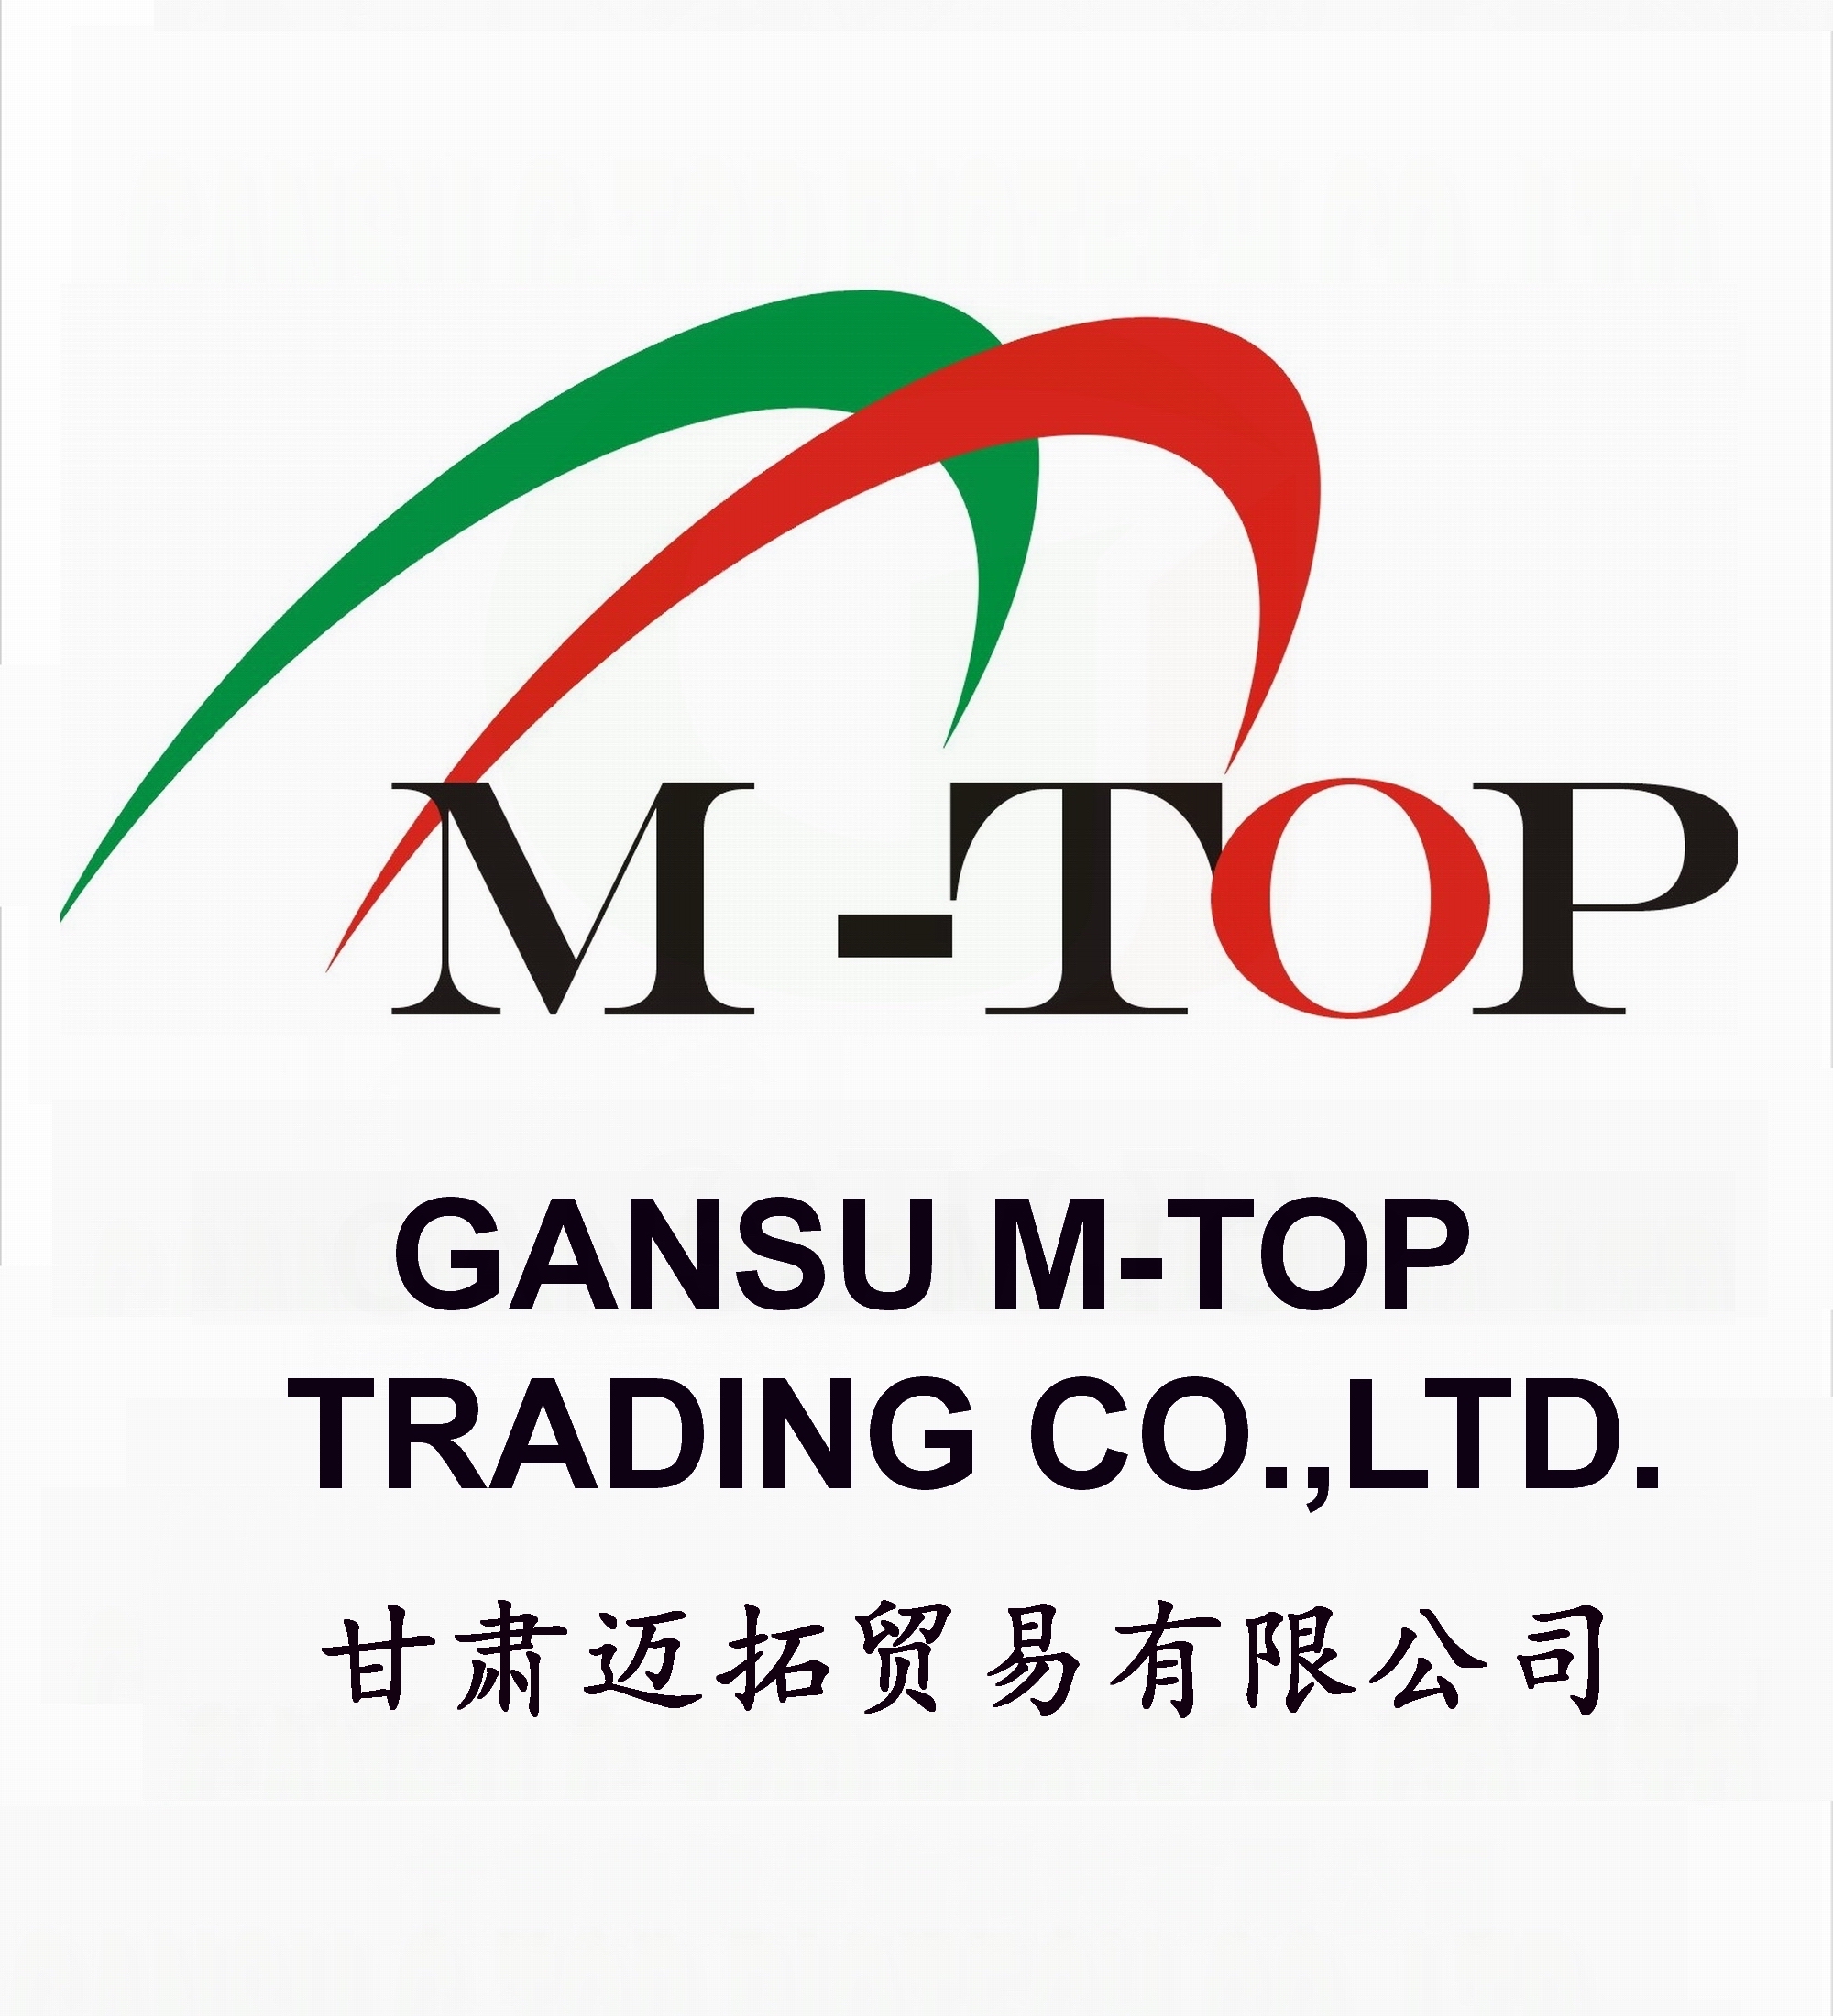 GANSU M-TOP TRADING CO.,LTD